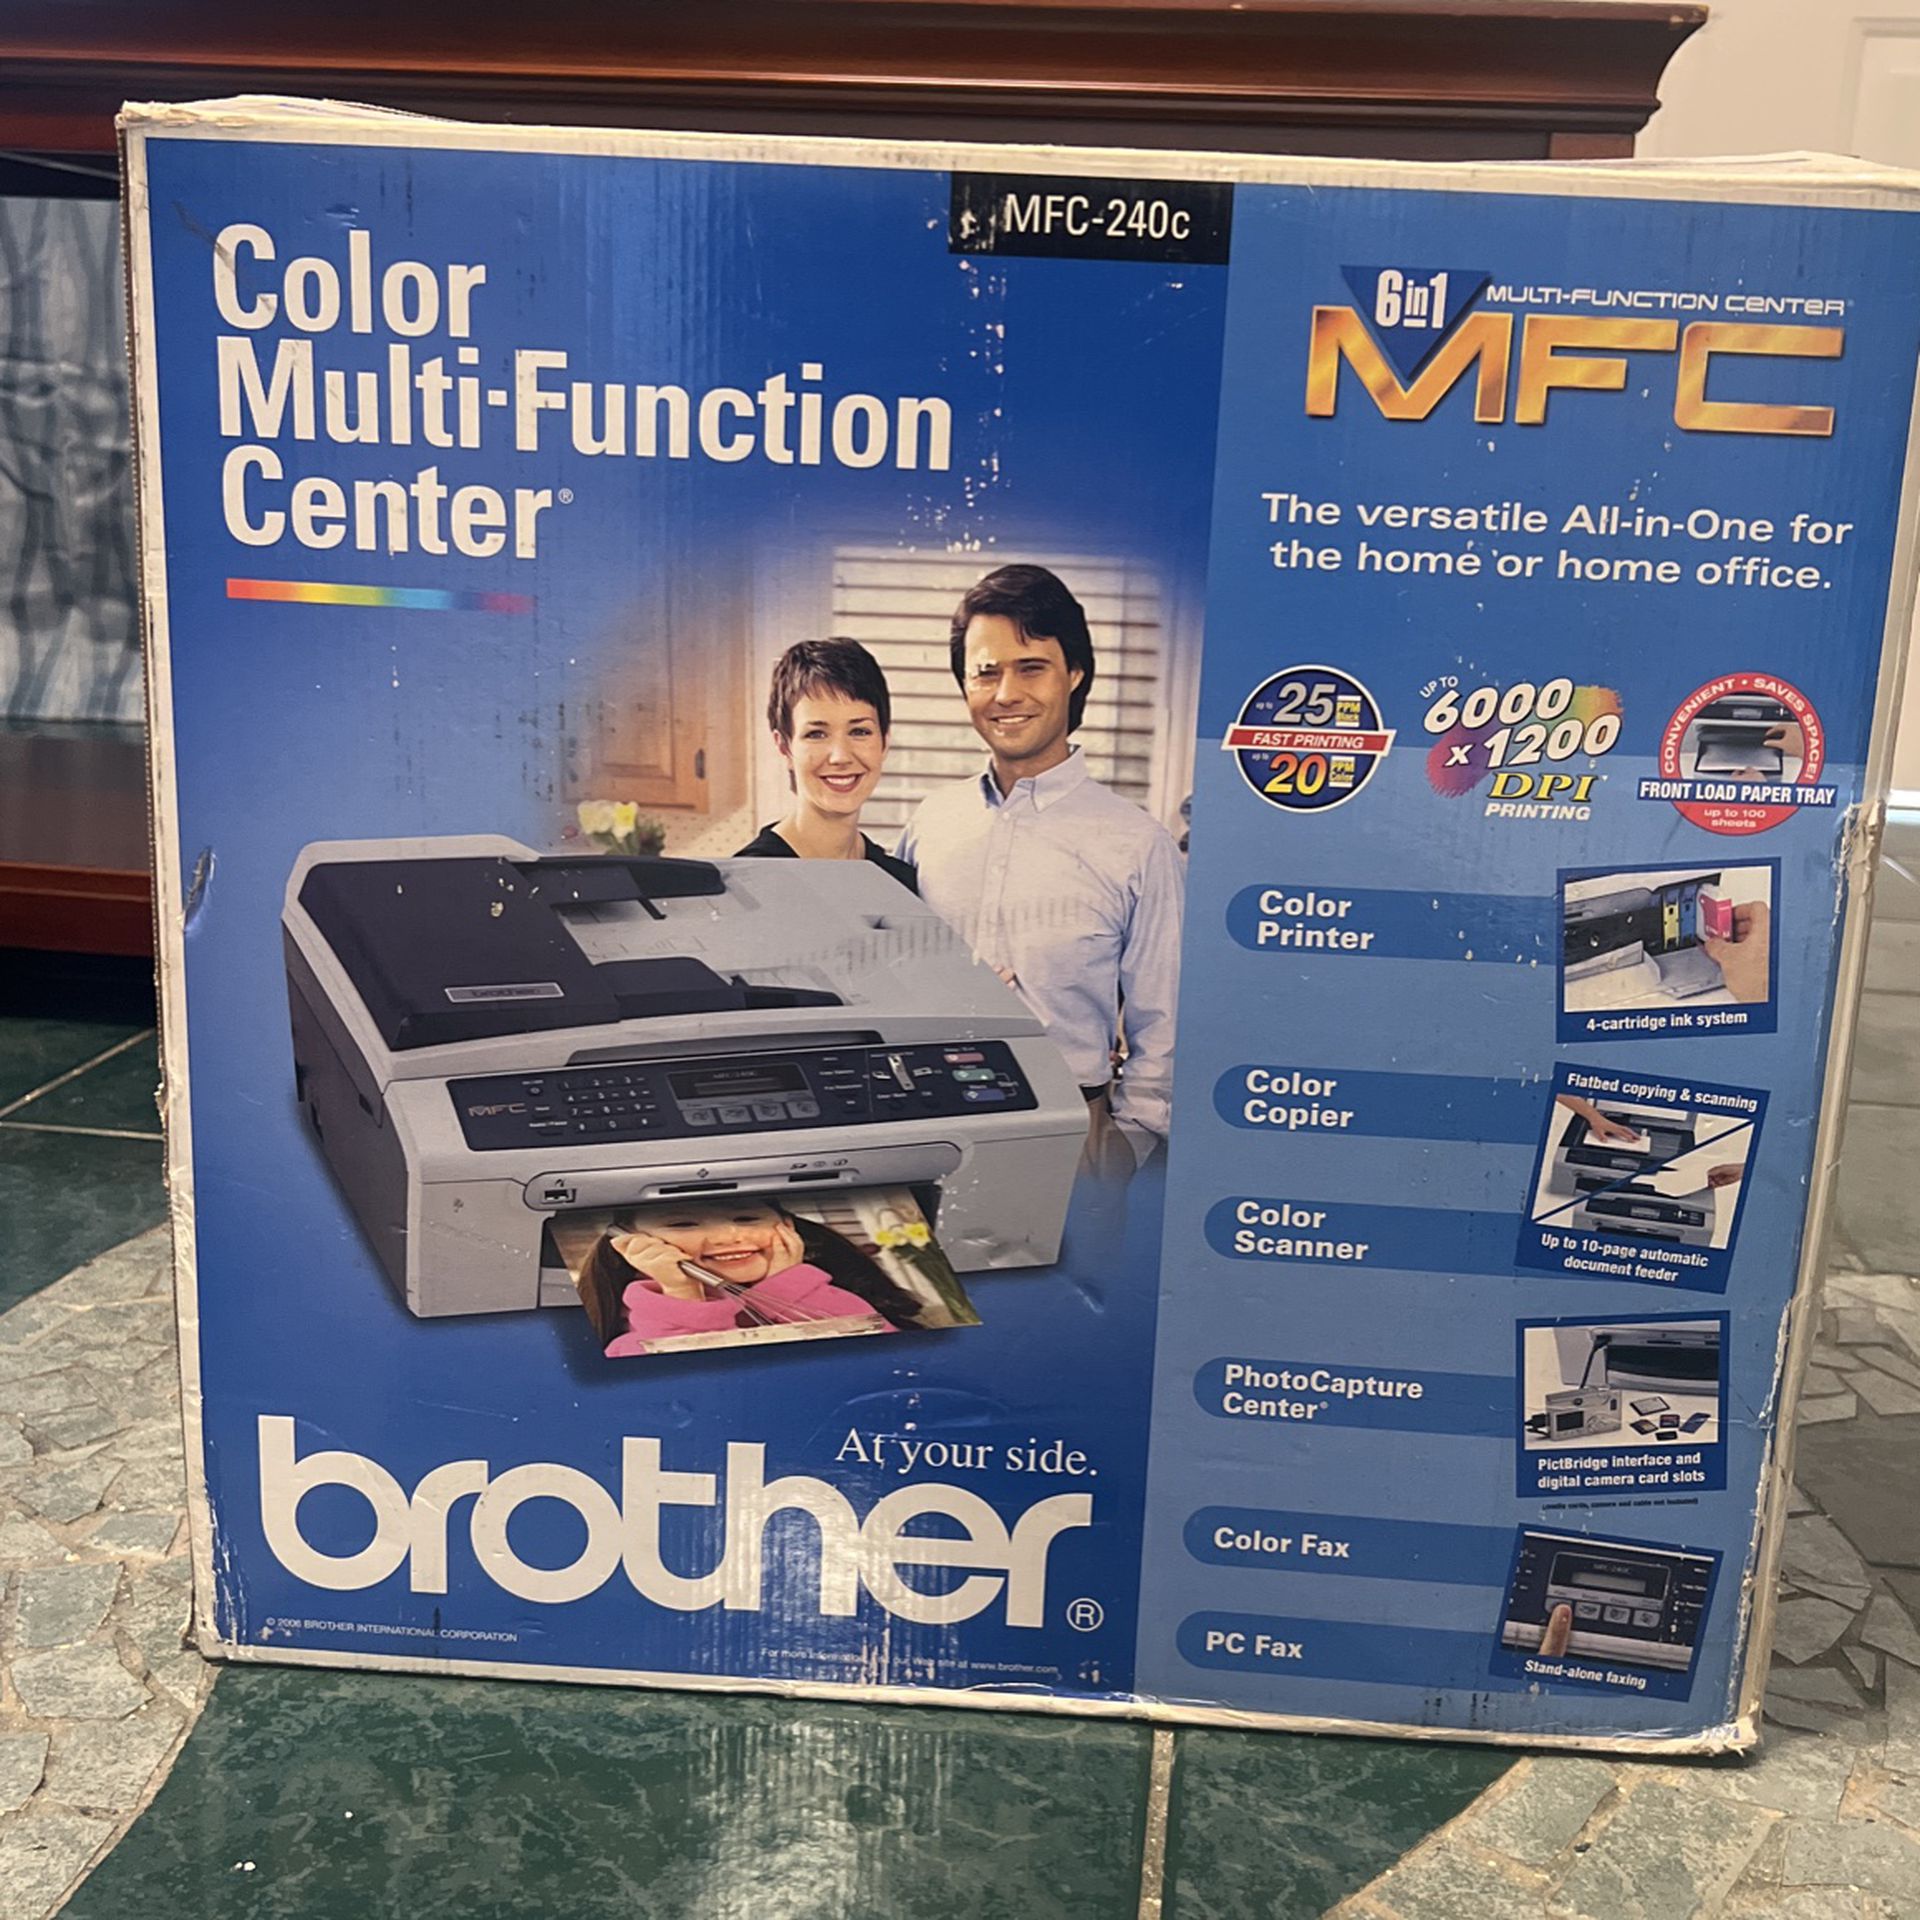 Color Multi-function Center Printer